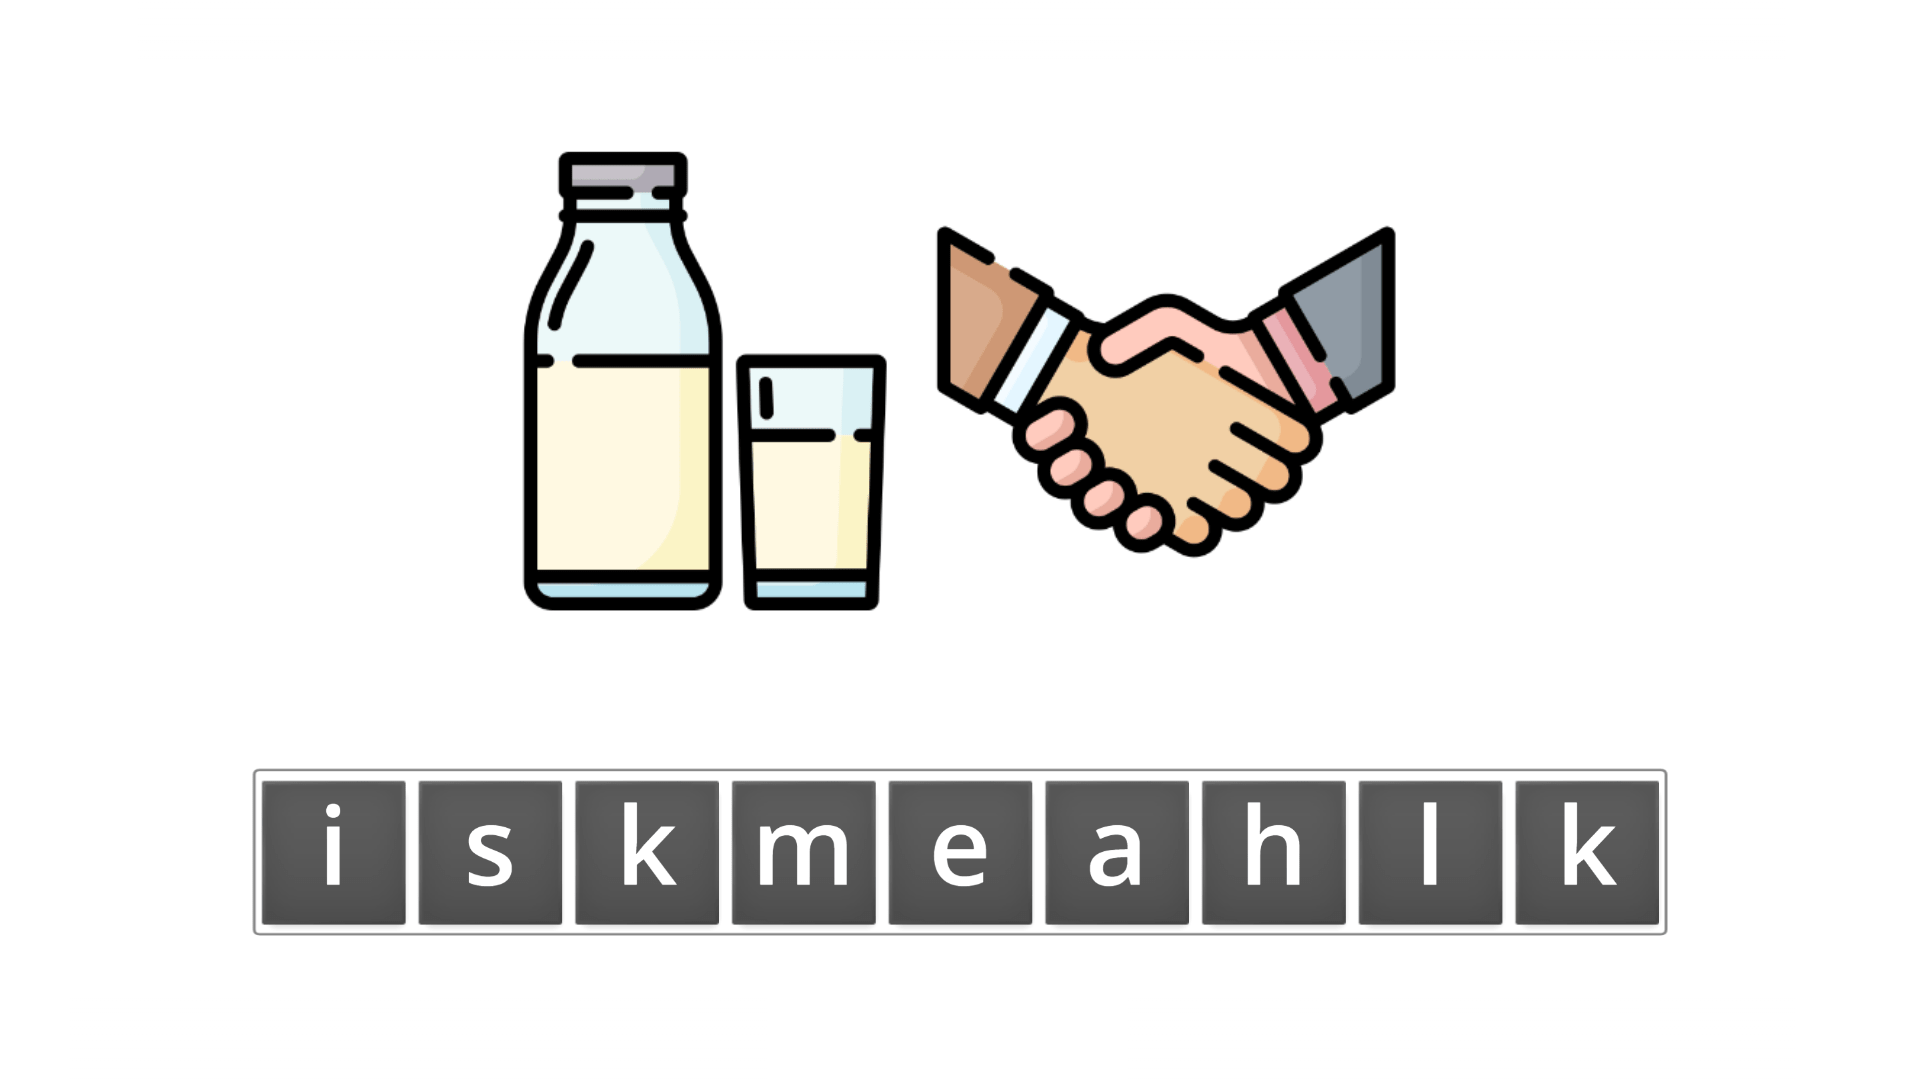 esl resources - flashcards - compound nouns  - unscramble - milkshake